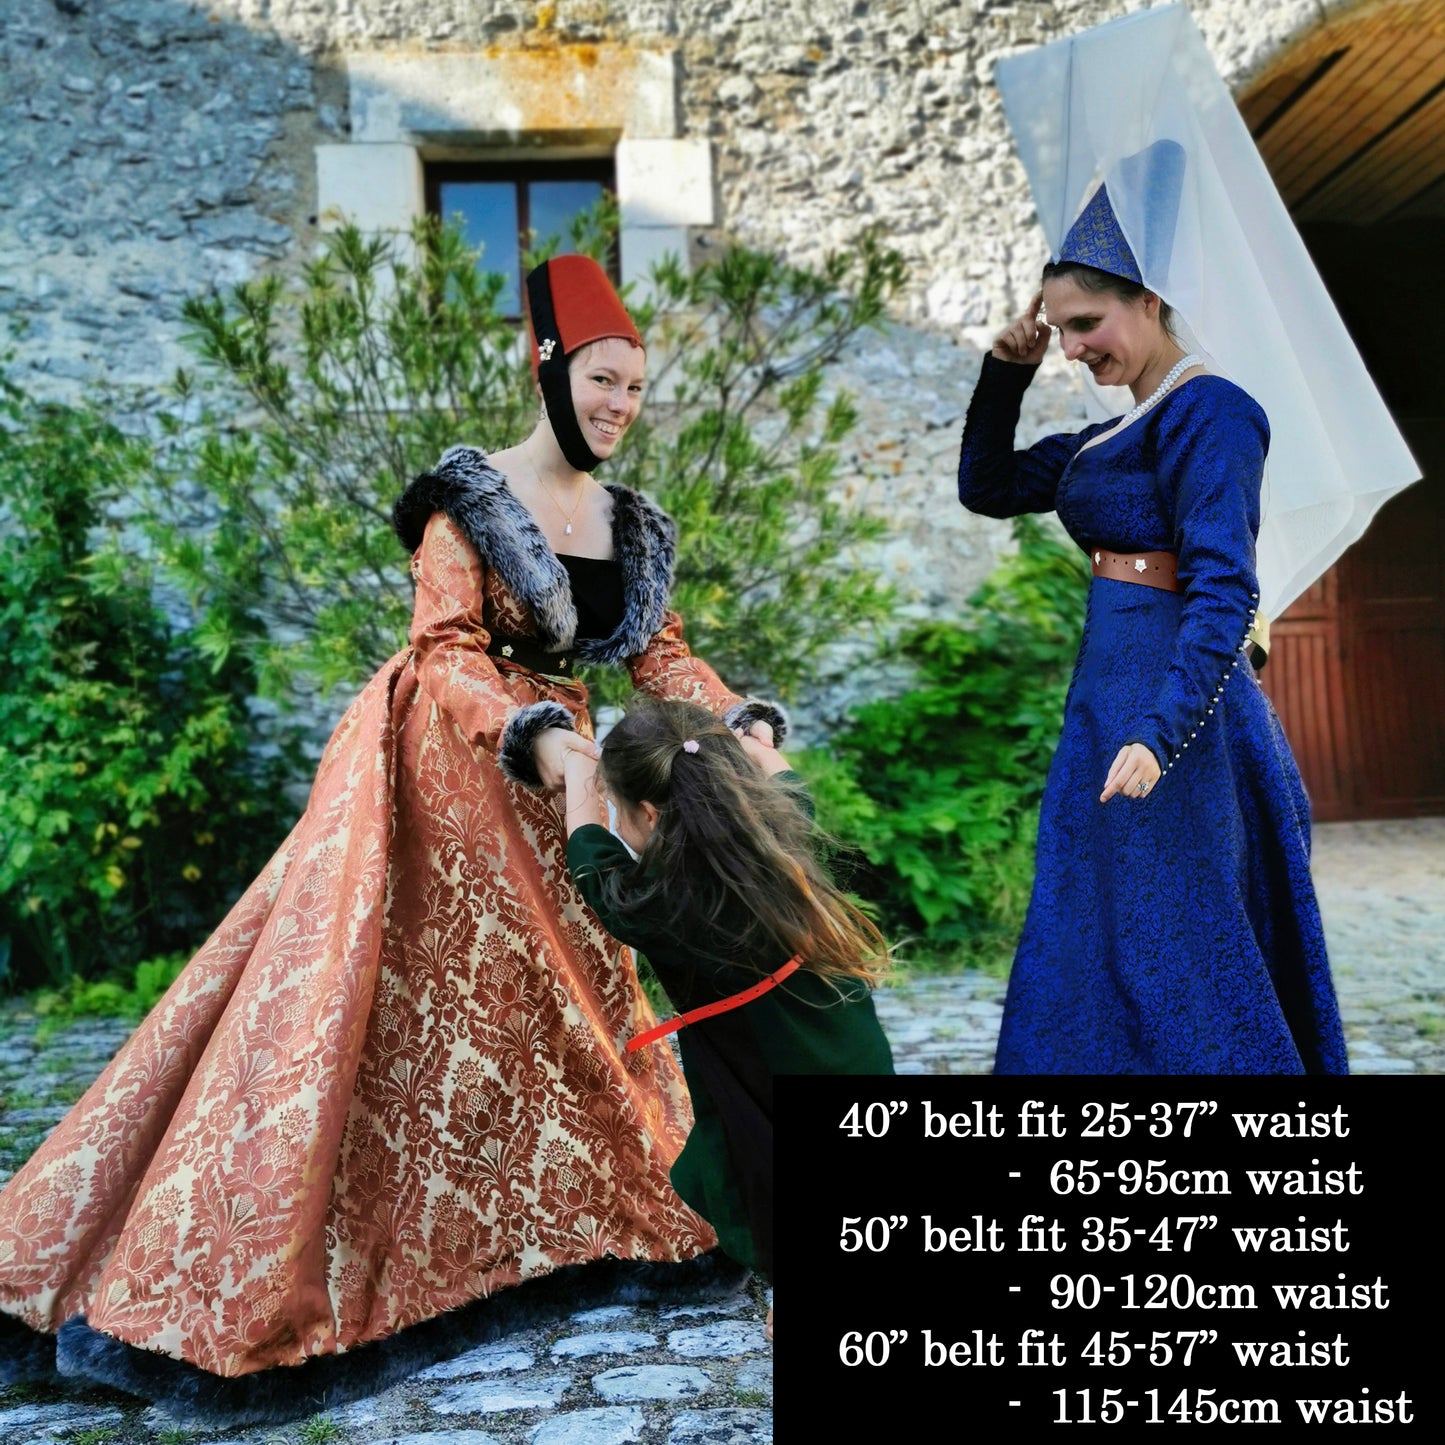 15th Century 2" Wide Woman's Belt to Wear in a Burgundian Style